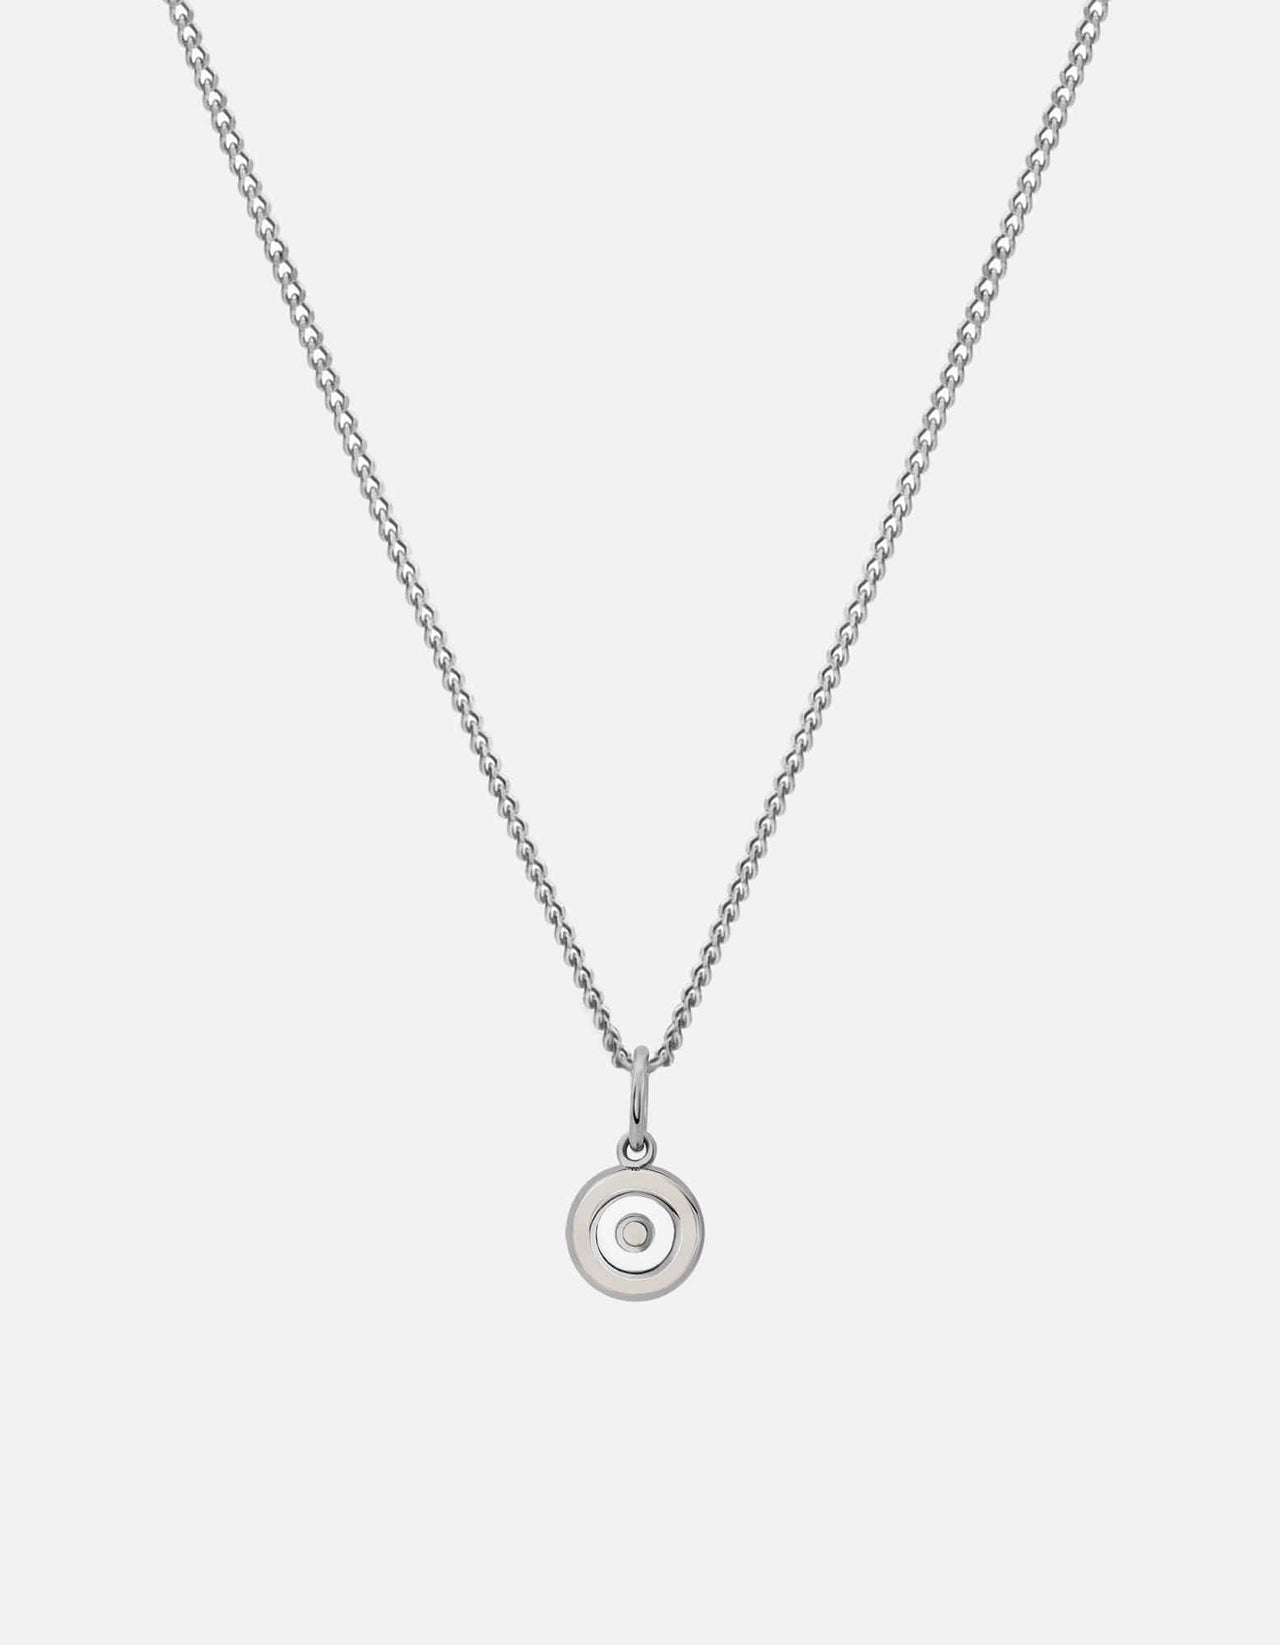 Miansai Men's Lynx Chain Necklace, Sterling Silver, Size 21 in.